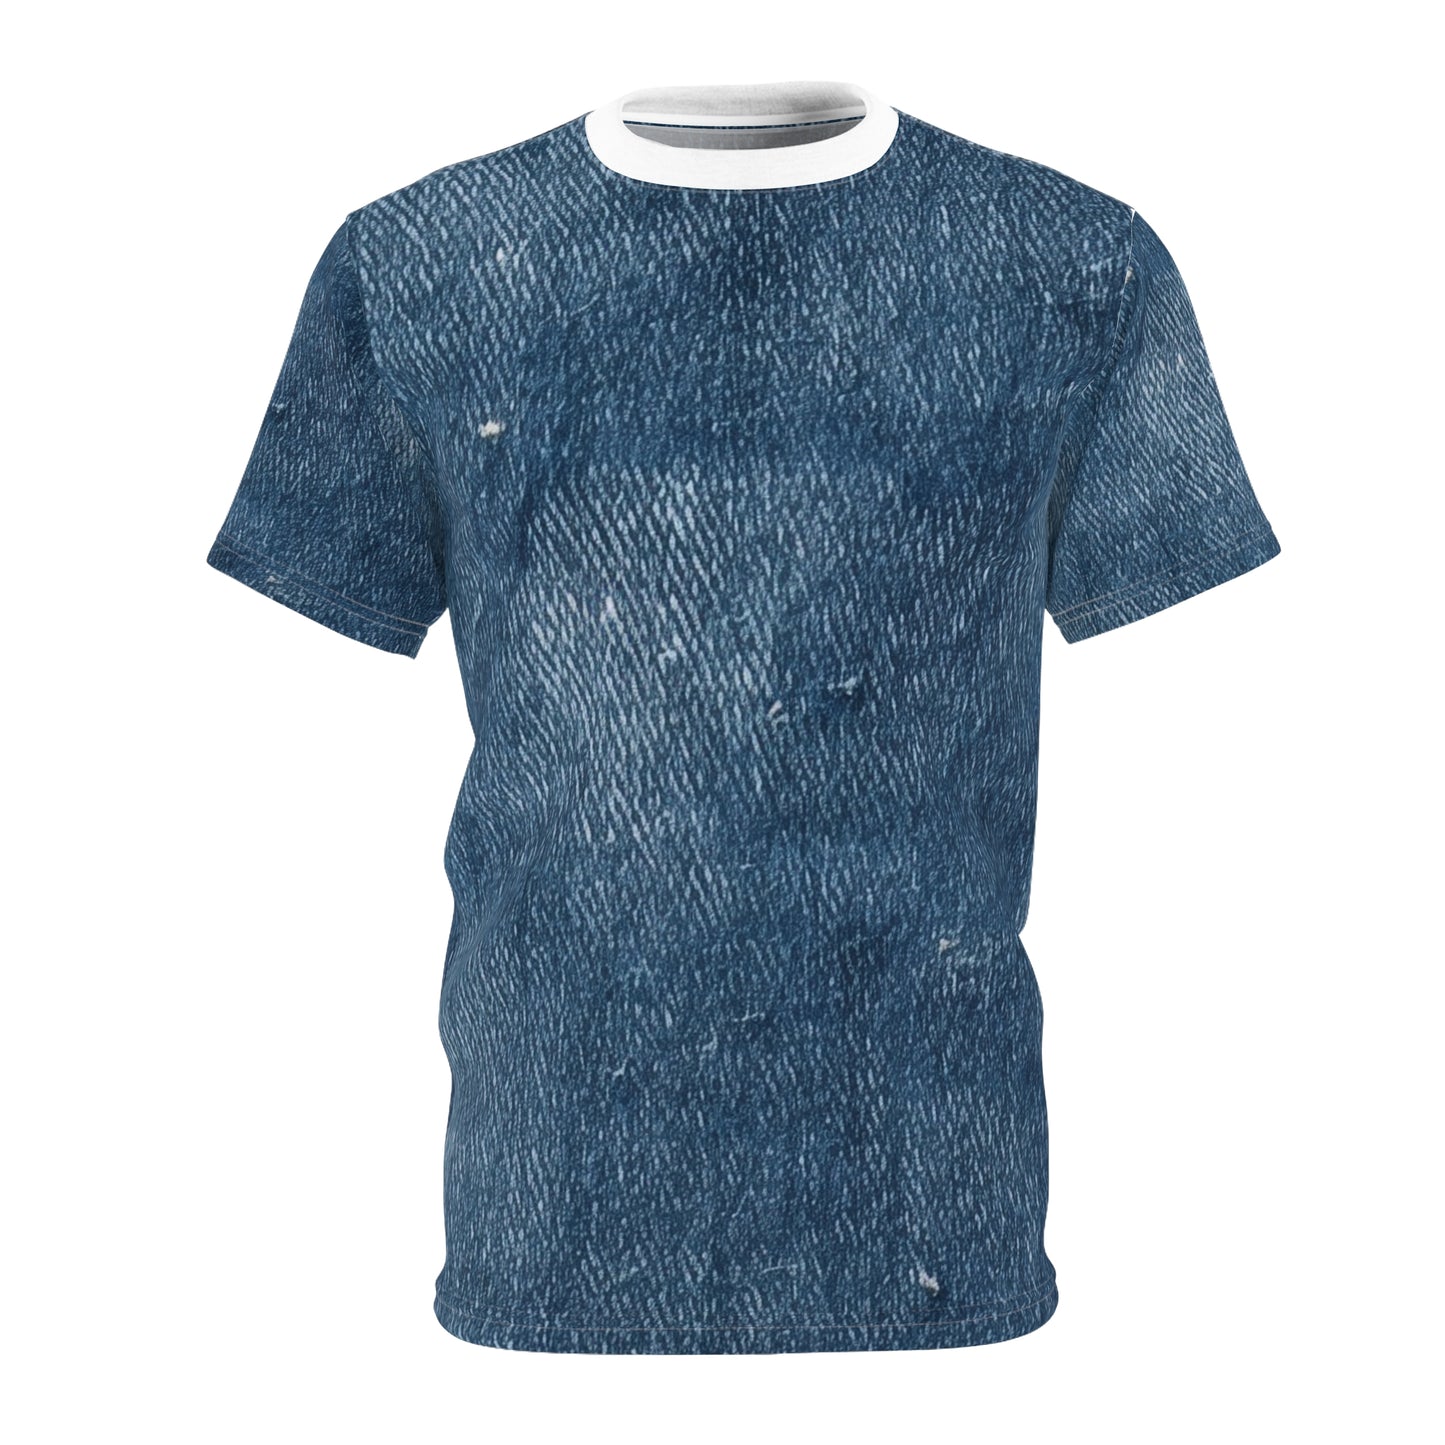 Dark Blue: Distressed Denim-Inspired Fabric Design - Unisex Cut & Sew Tee (AOP)